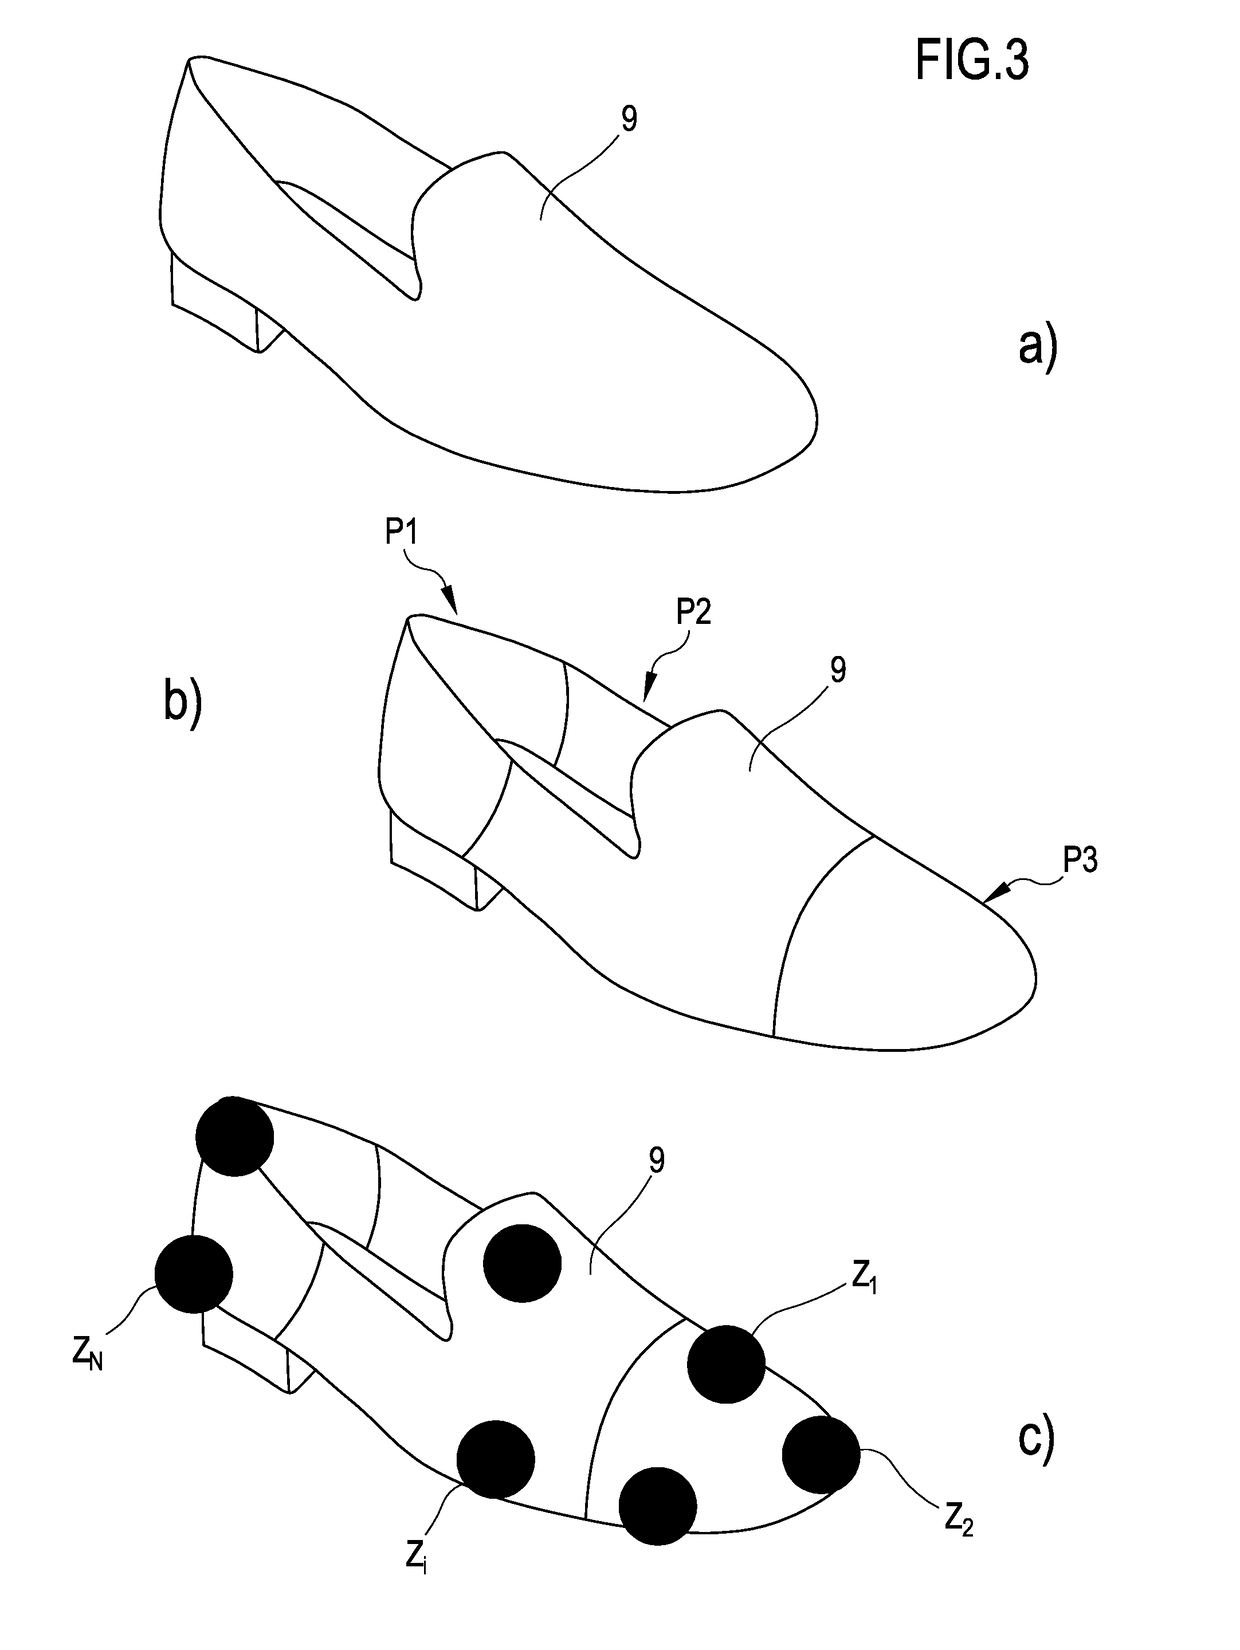 Shoe last selection method, based on virtual fitting simulation and customer feedback